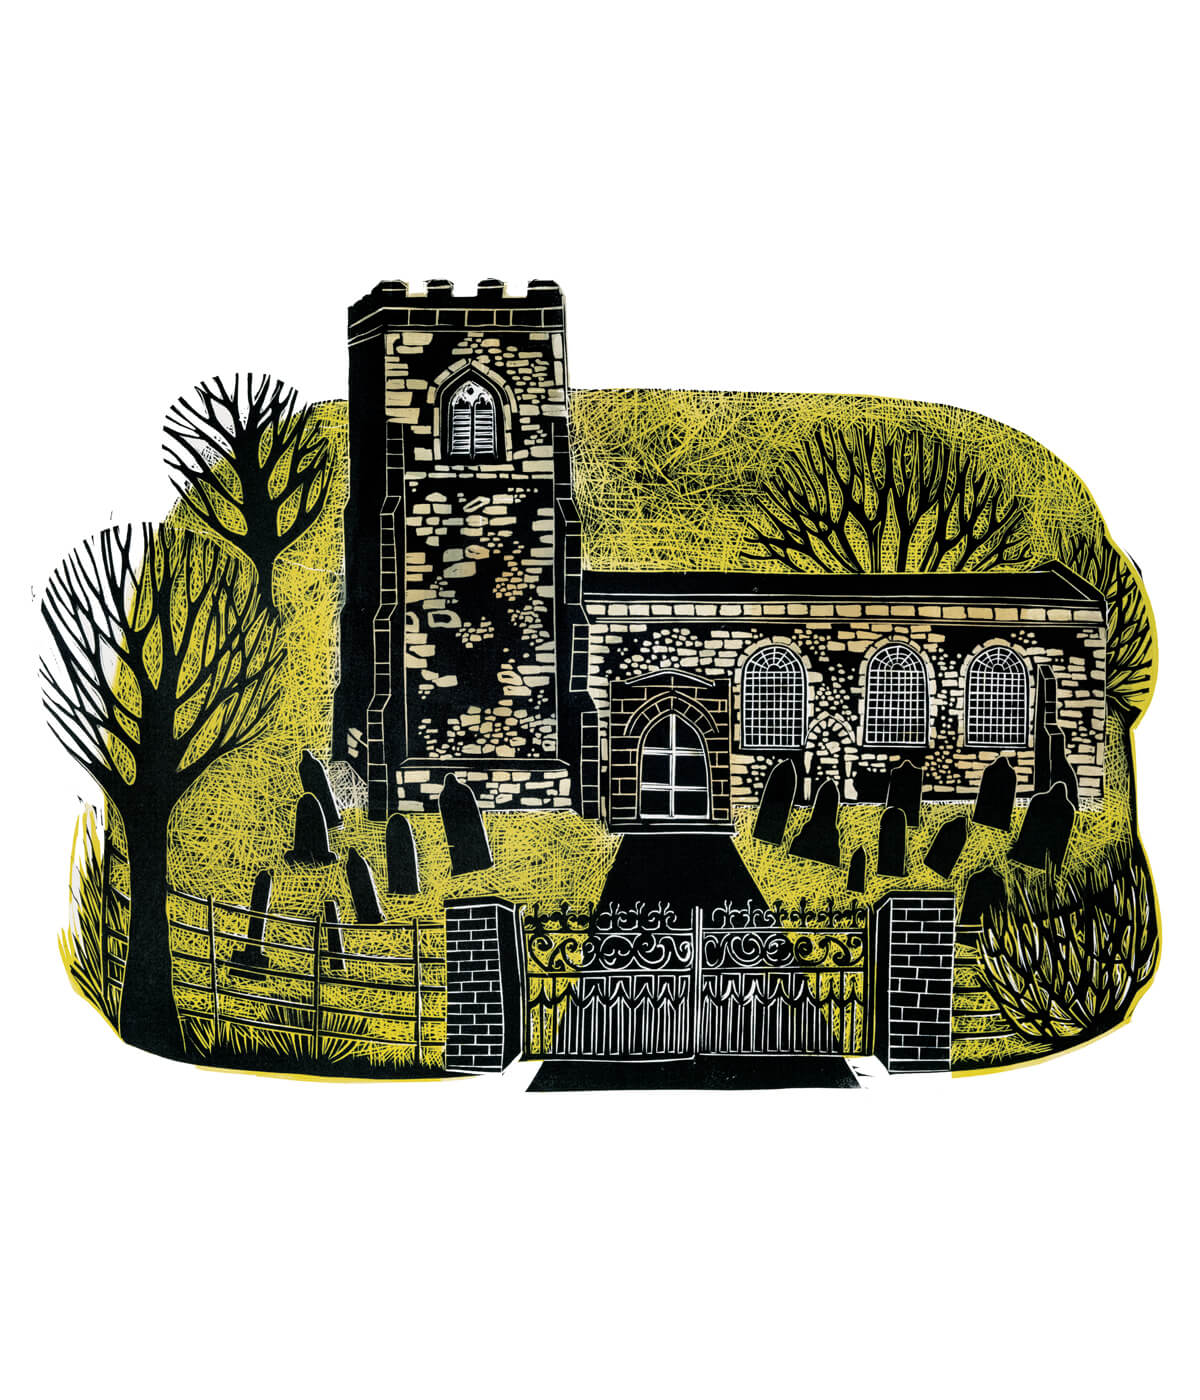 Wistow Church, a linocut print by Sarah Kirby